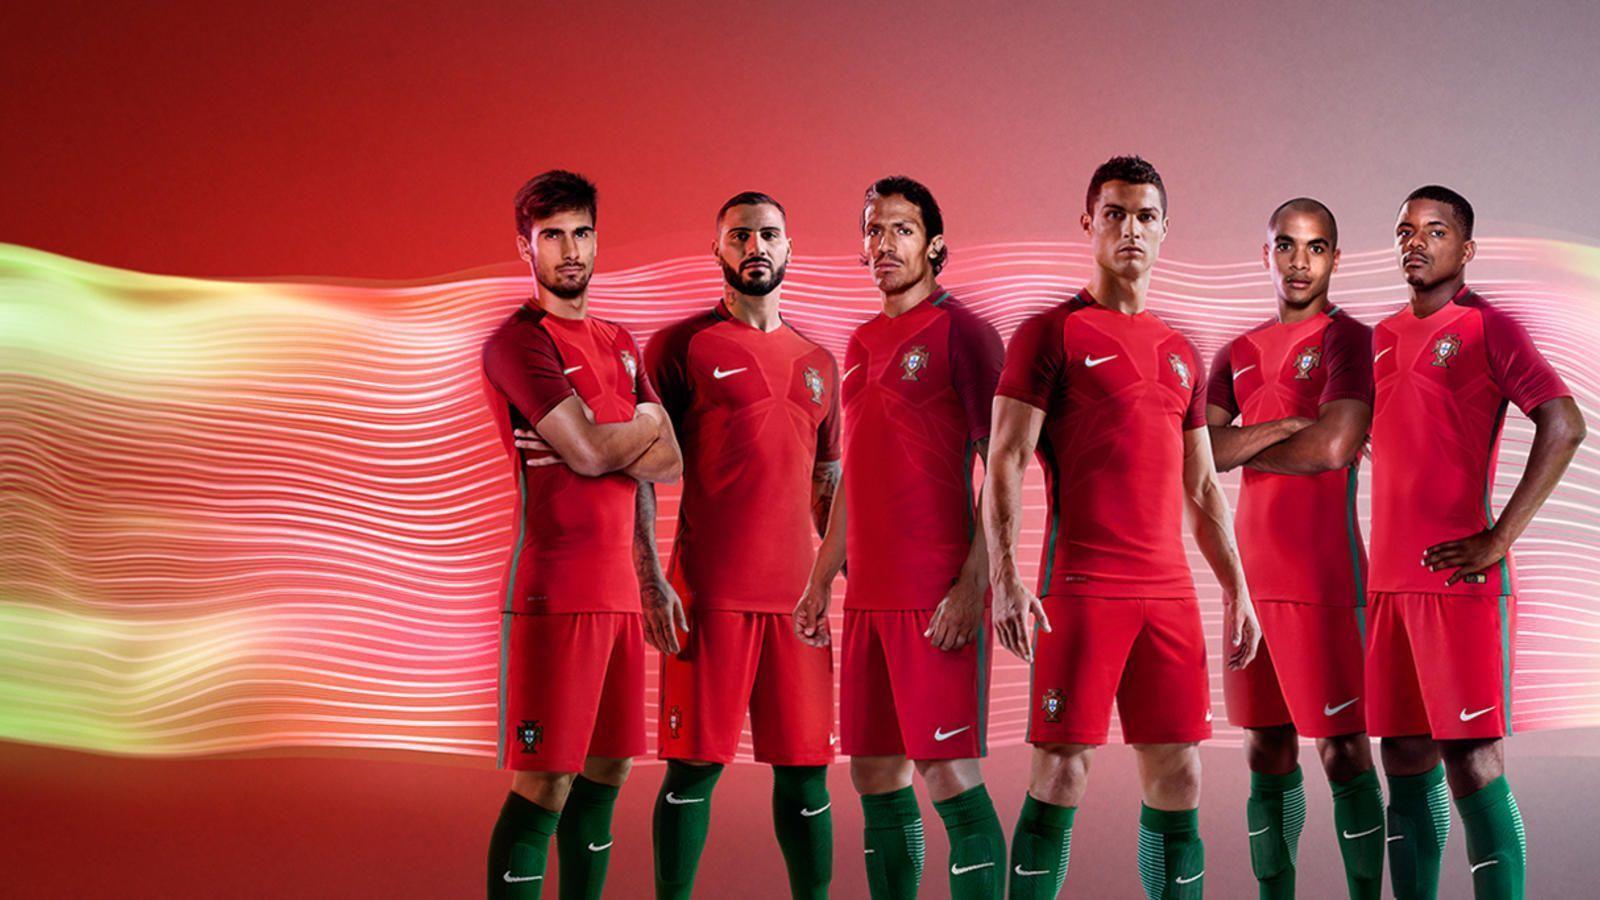 Portugal National Football Team 2016 Wallpaper Background